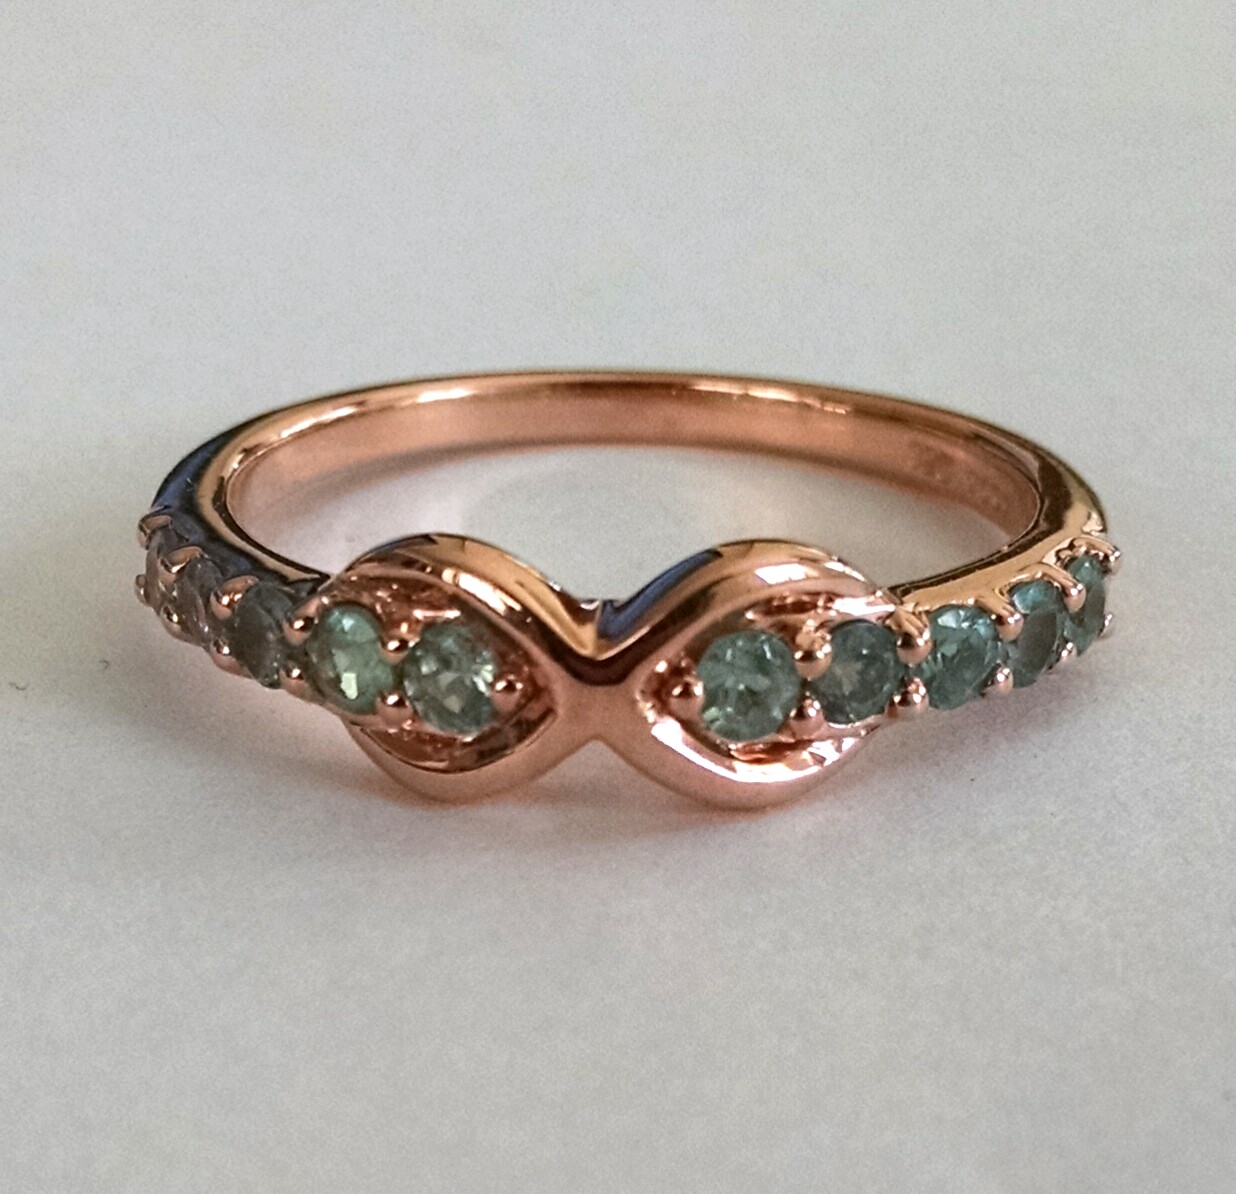 Peridot ring band with rose gold plating